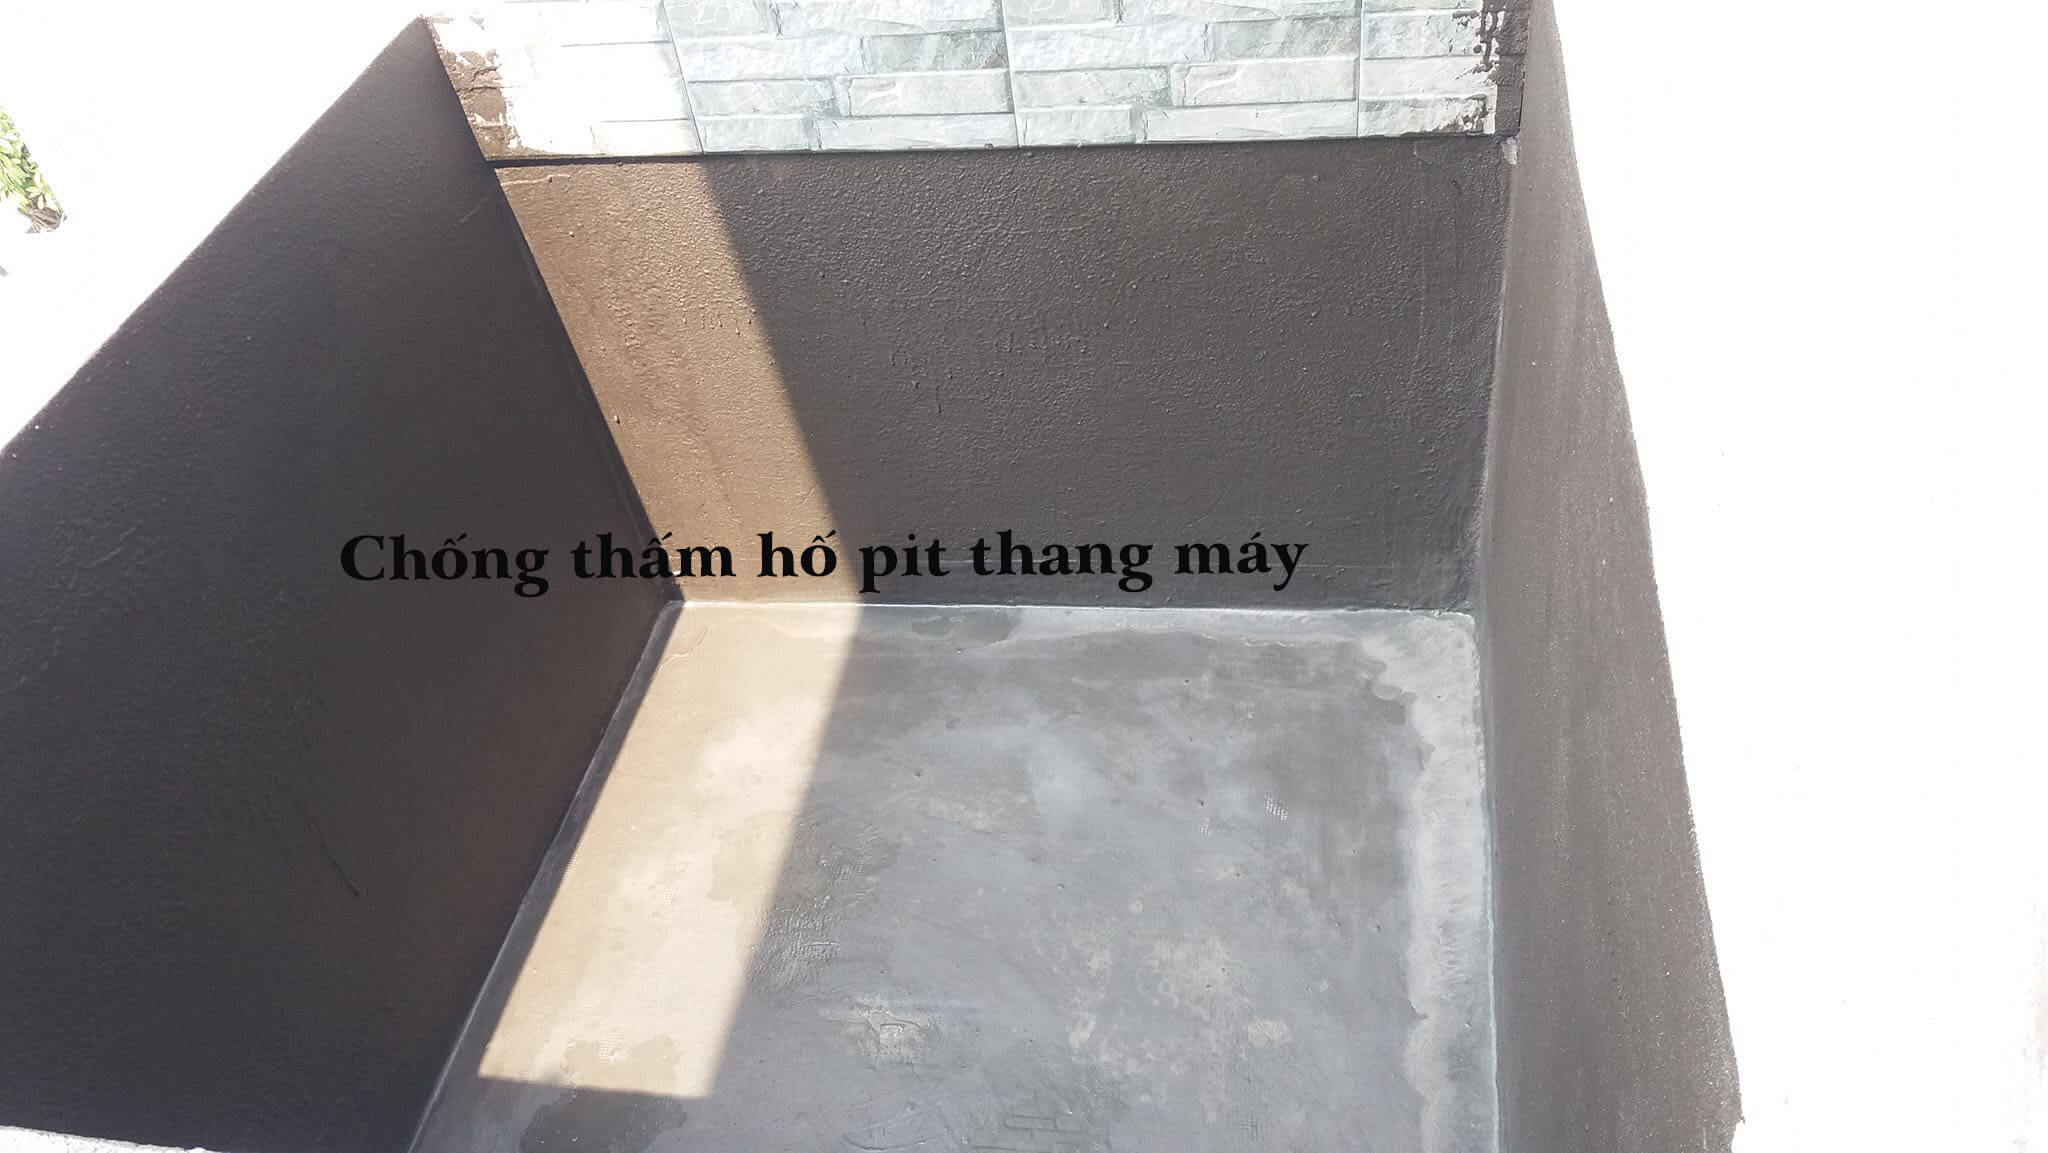 chong-tham-ho-pit-thang-may-chuyen-nghiep-hieu-qua-voi-dong-do